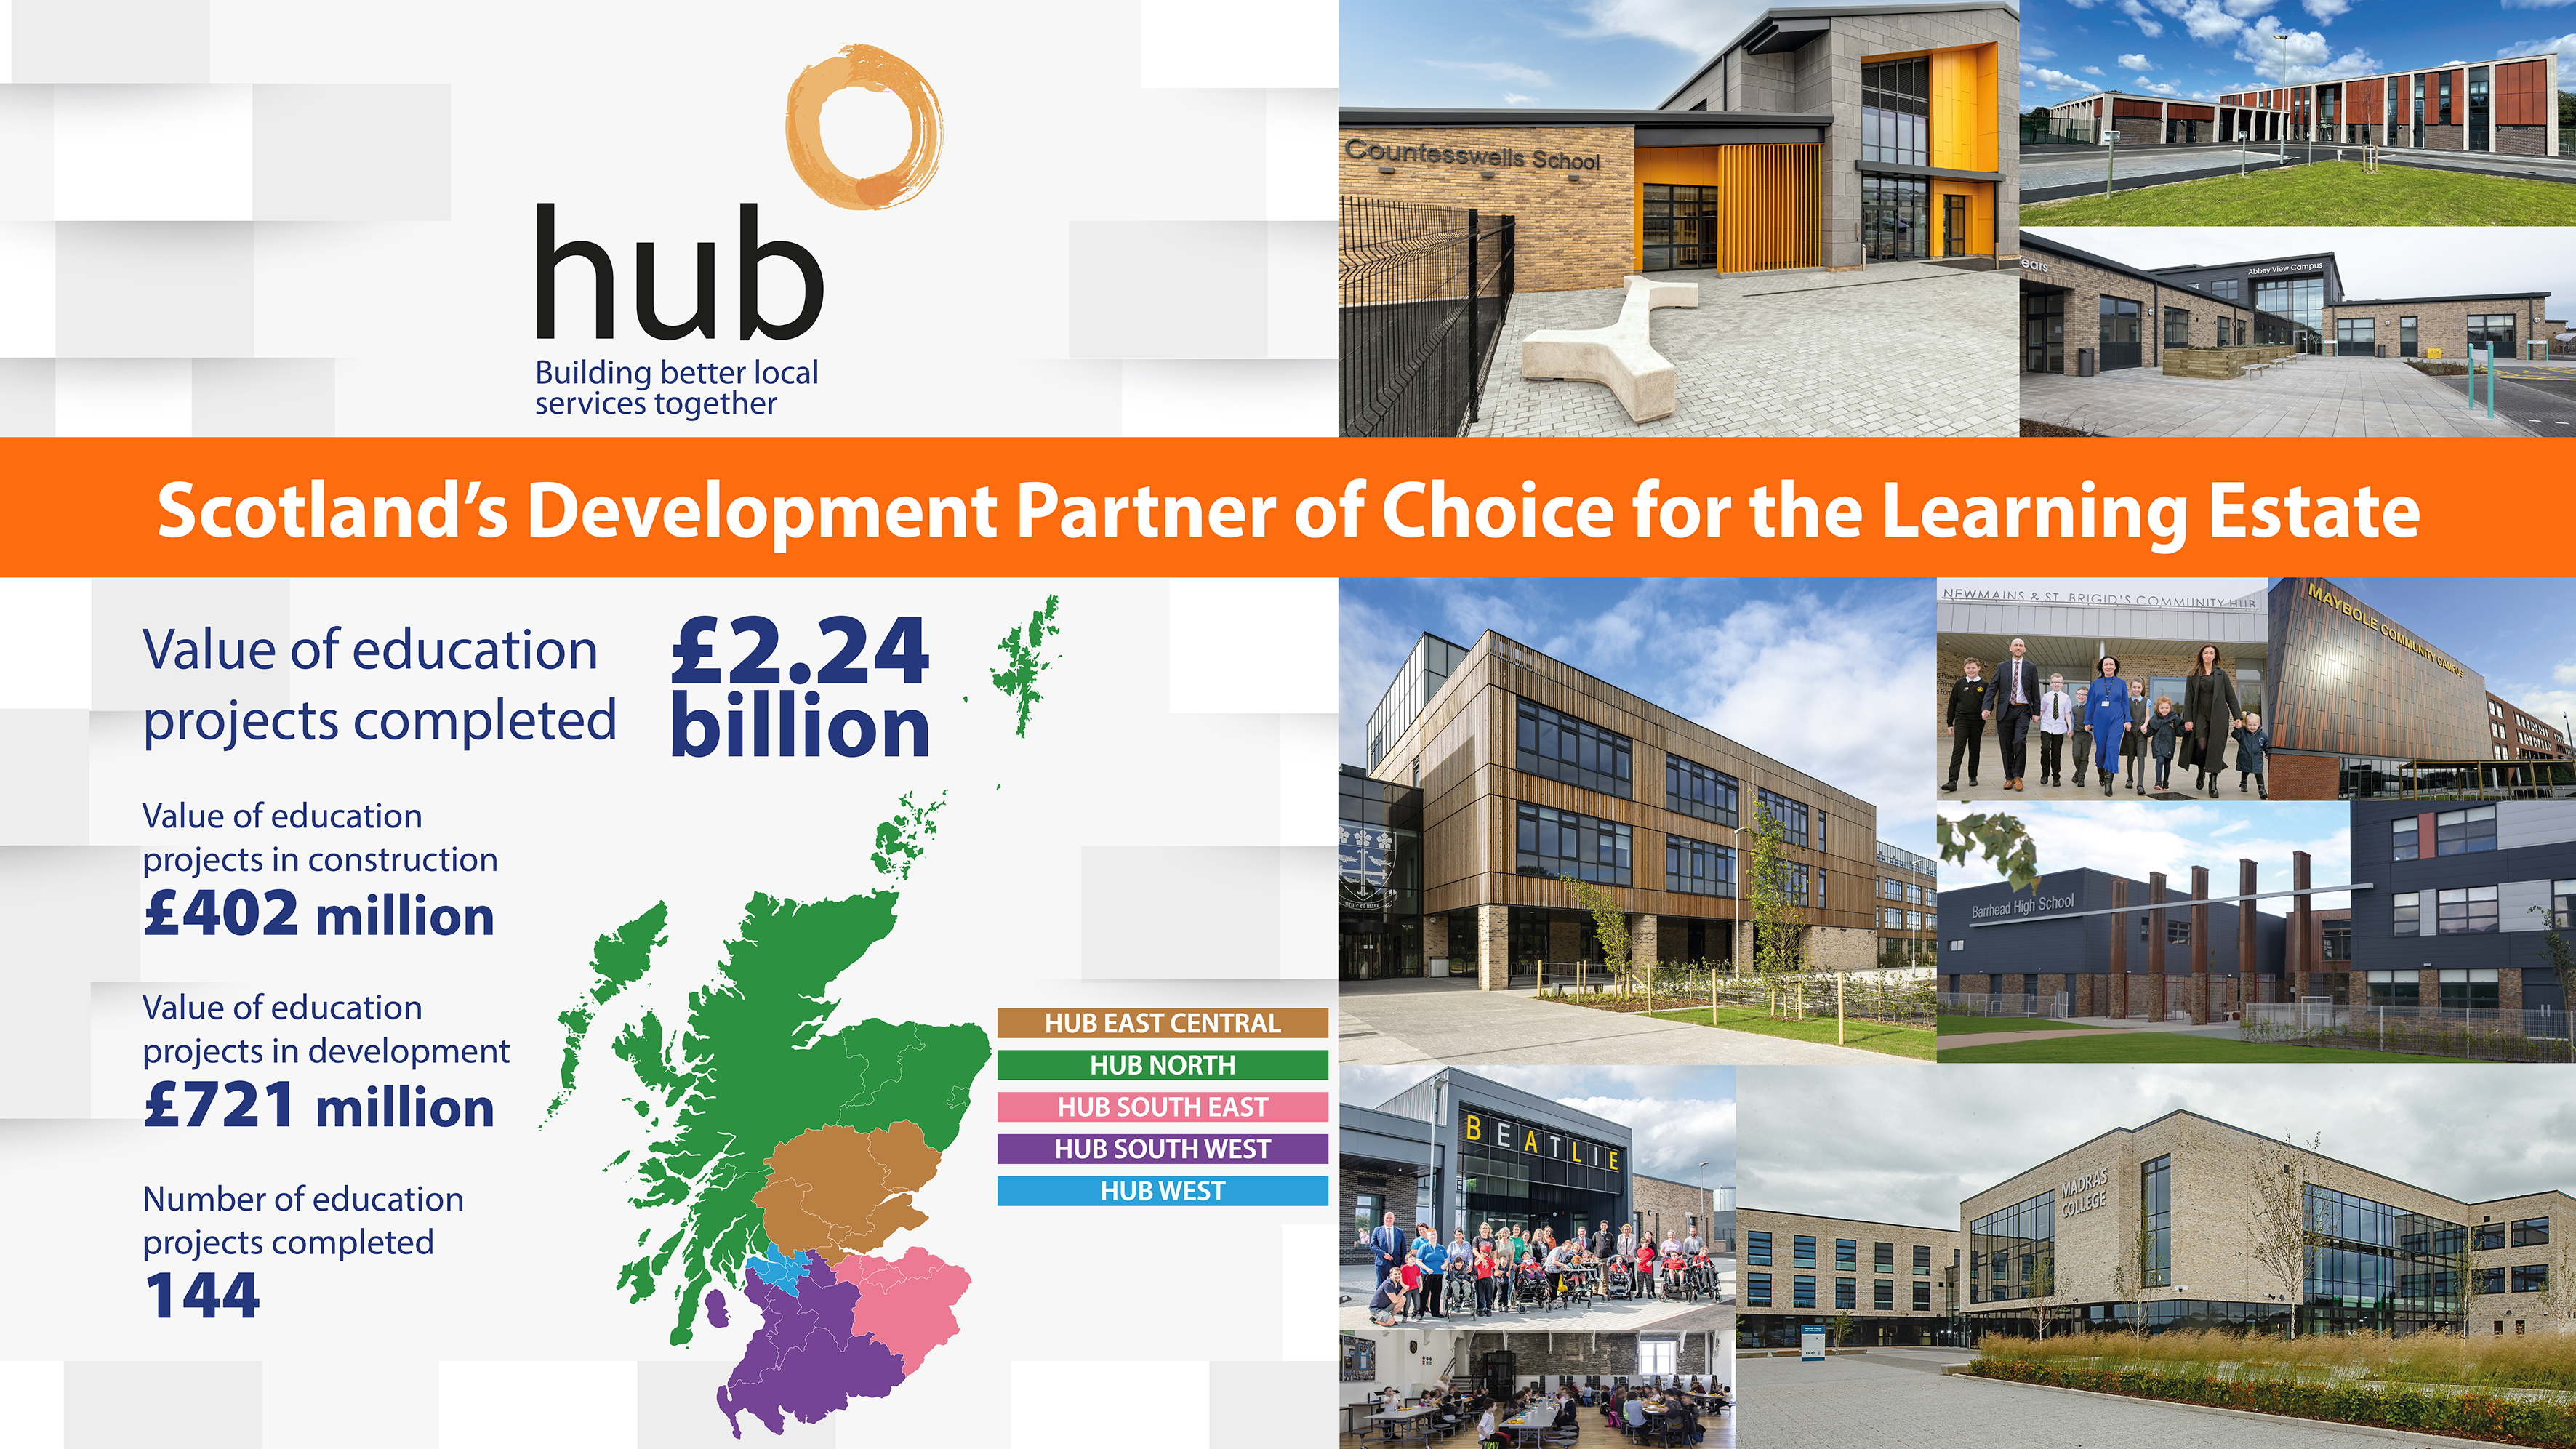 Hub programme delivers £2.24bn of learning estate infrastructure